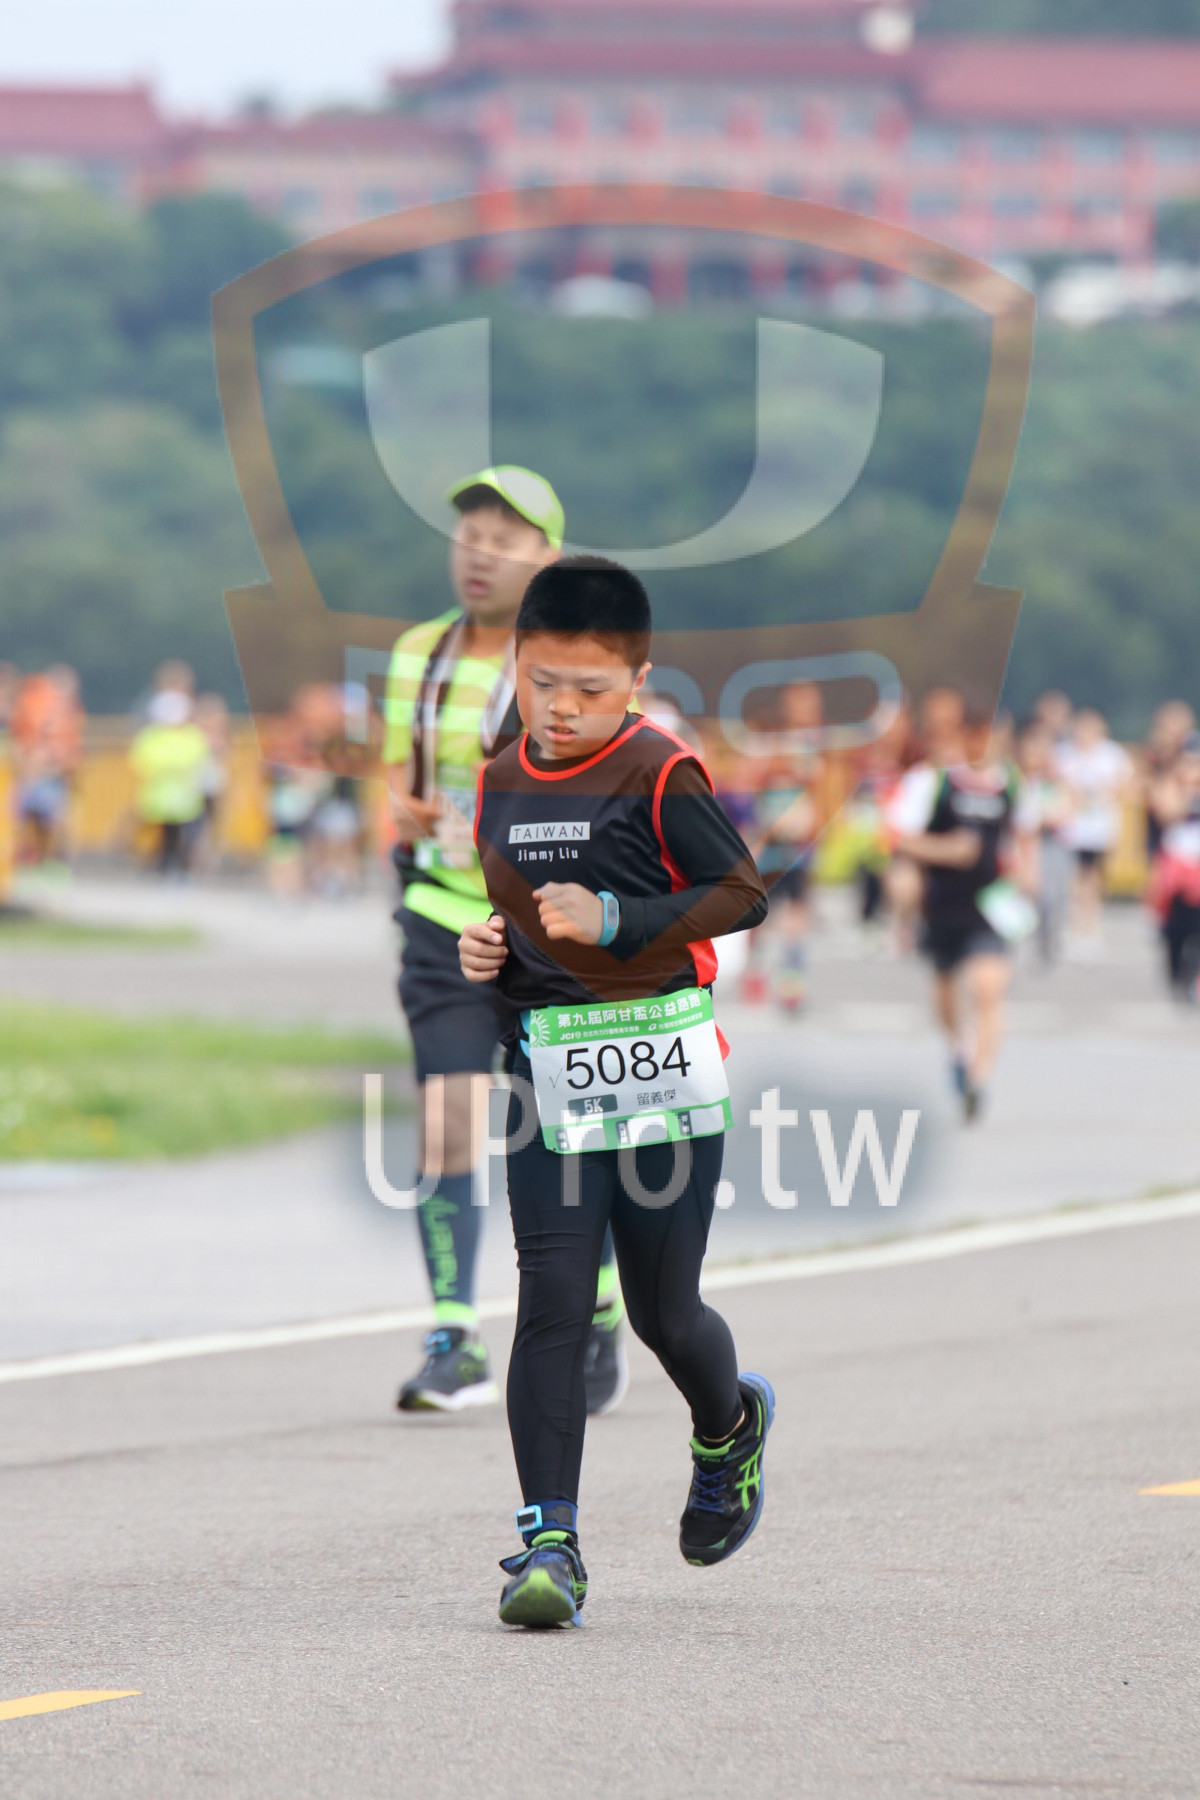 TAIWAN,Jimmy Liu,,5084,5K|2018 第九屆阿甘盃公益路跑|Soryu Asuka Langley